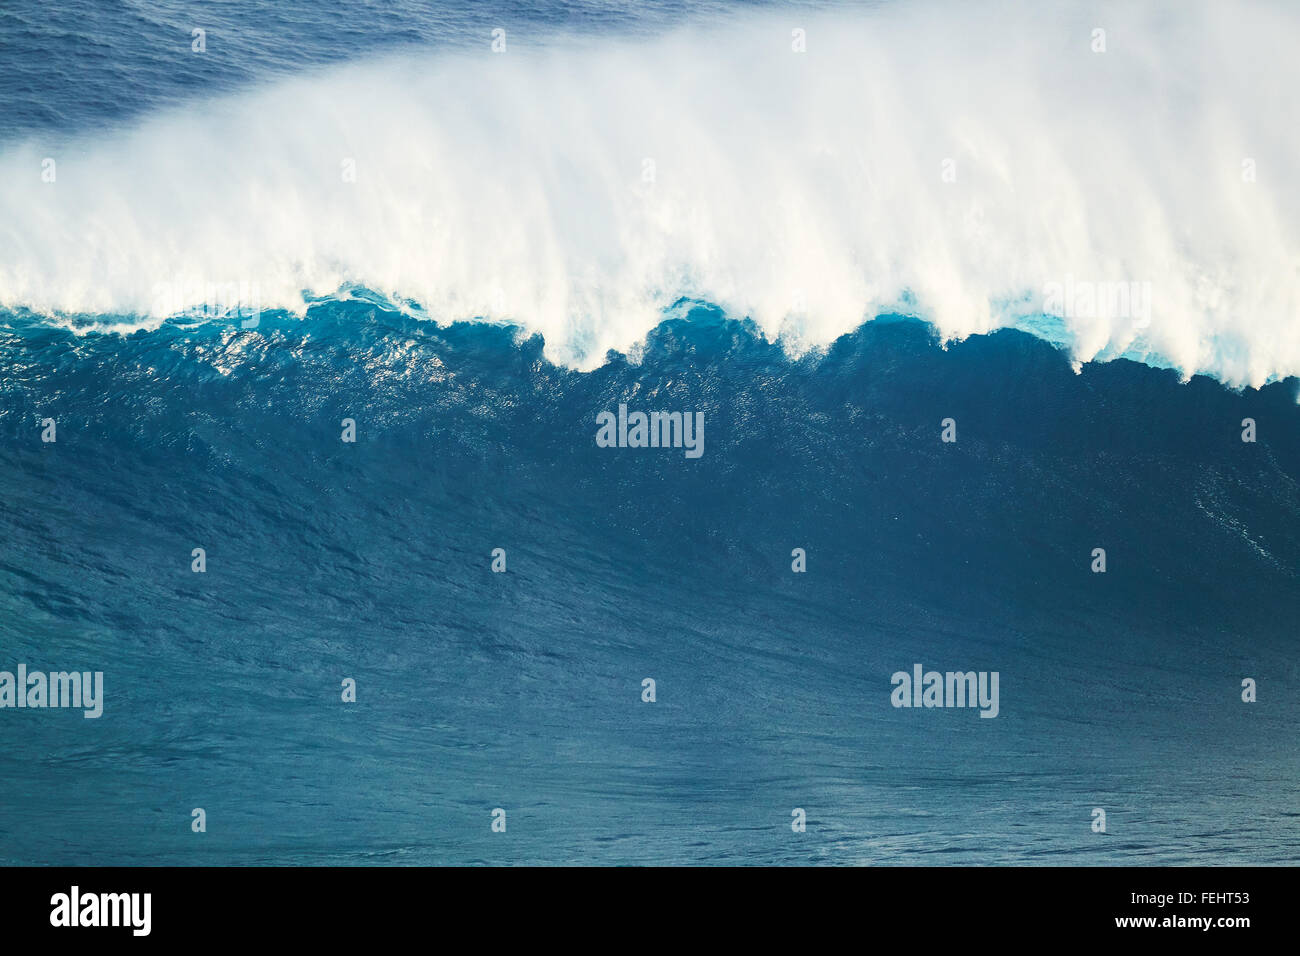 Giant Powerful Blue Ocean Wave Stock Photo